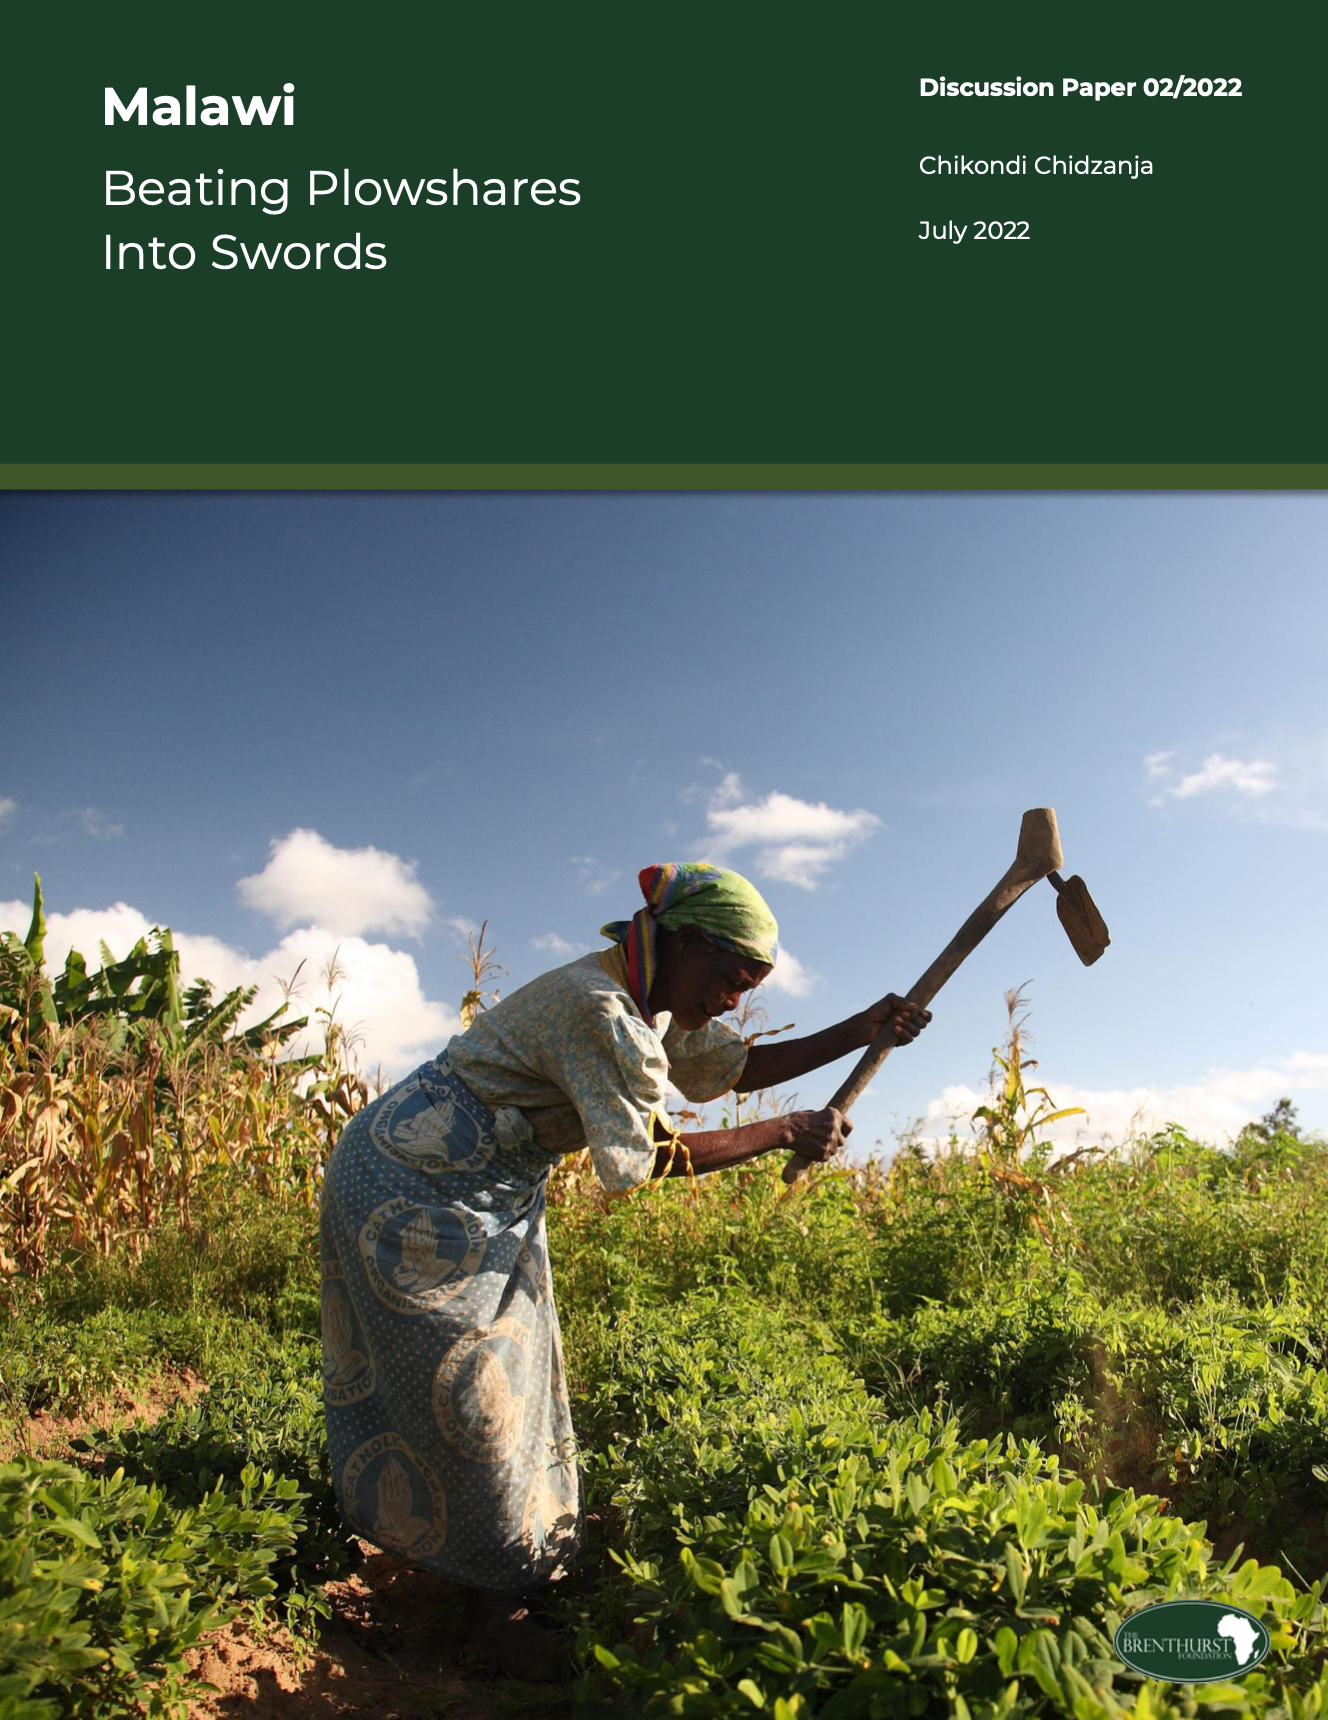 Malawi: Beating Plowshares Into Swords